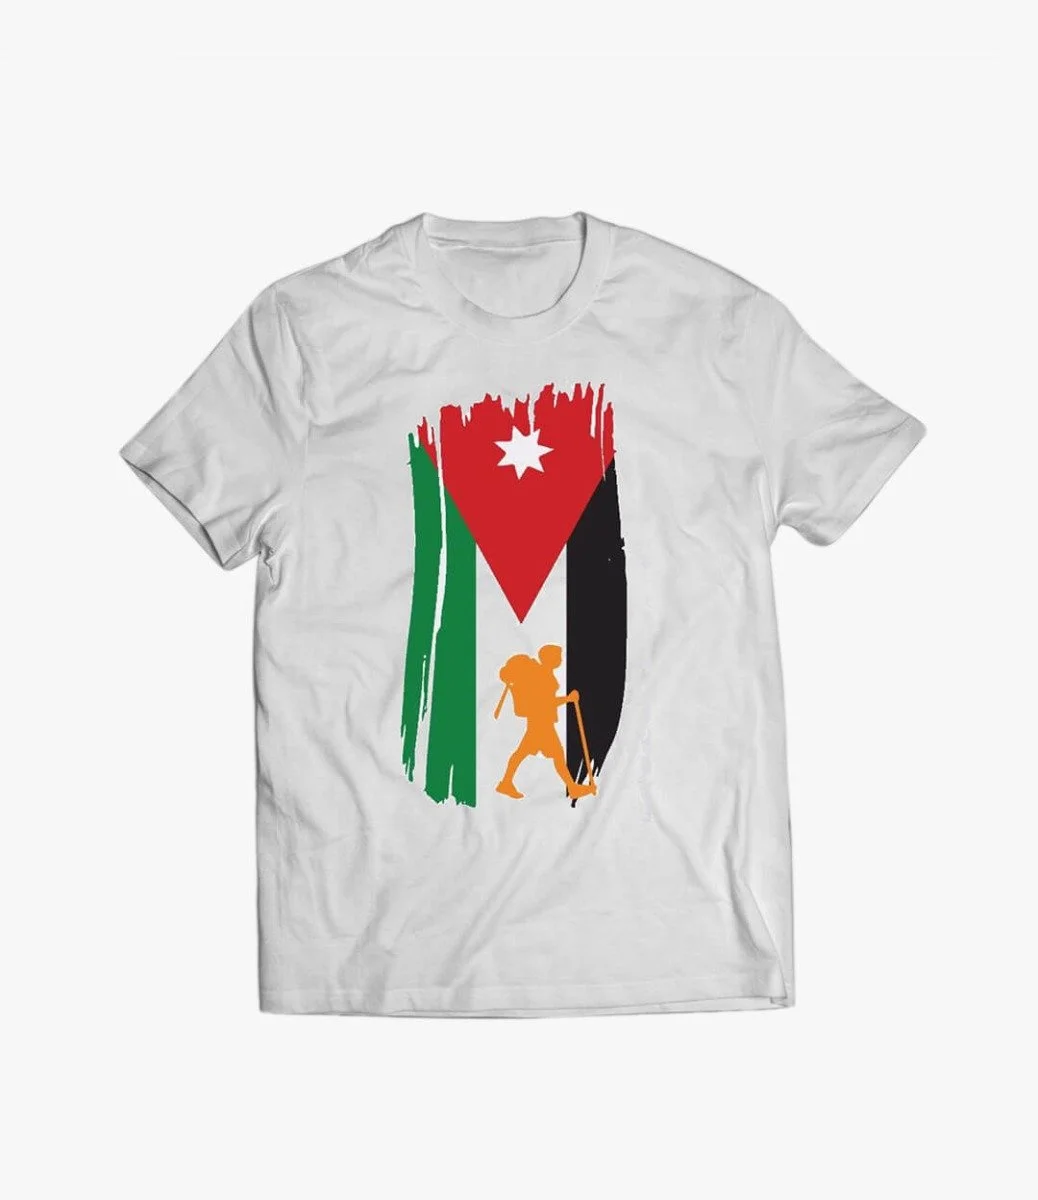 Men's Black Printed T-shirt with Jordanian Flag